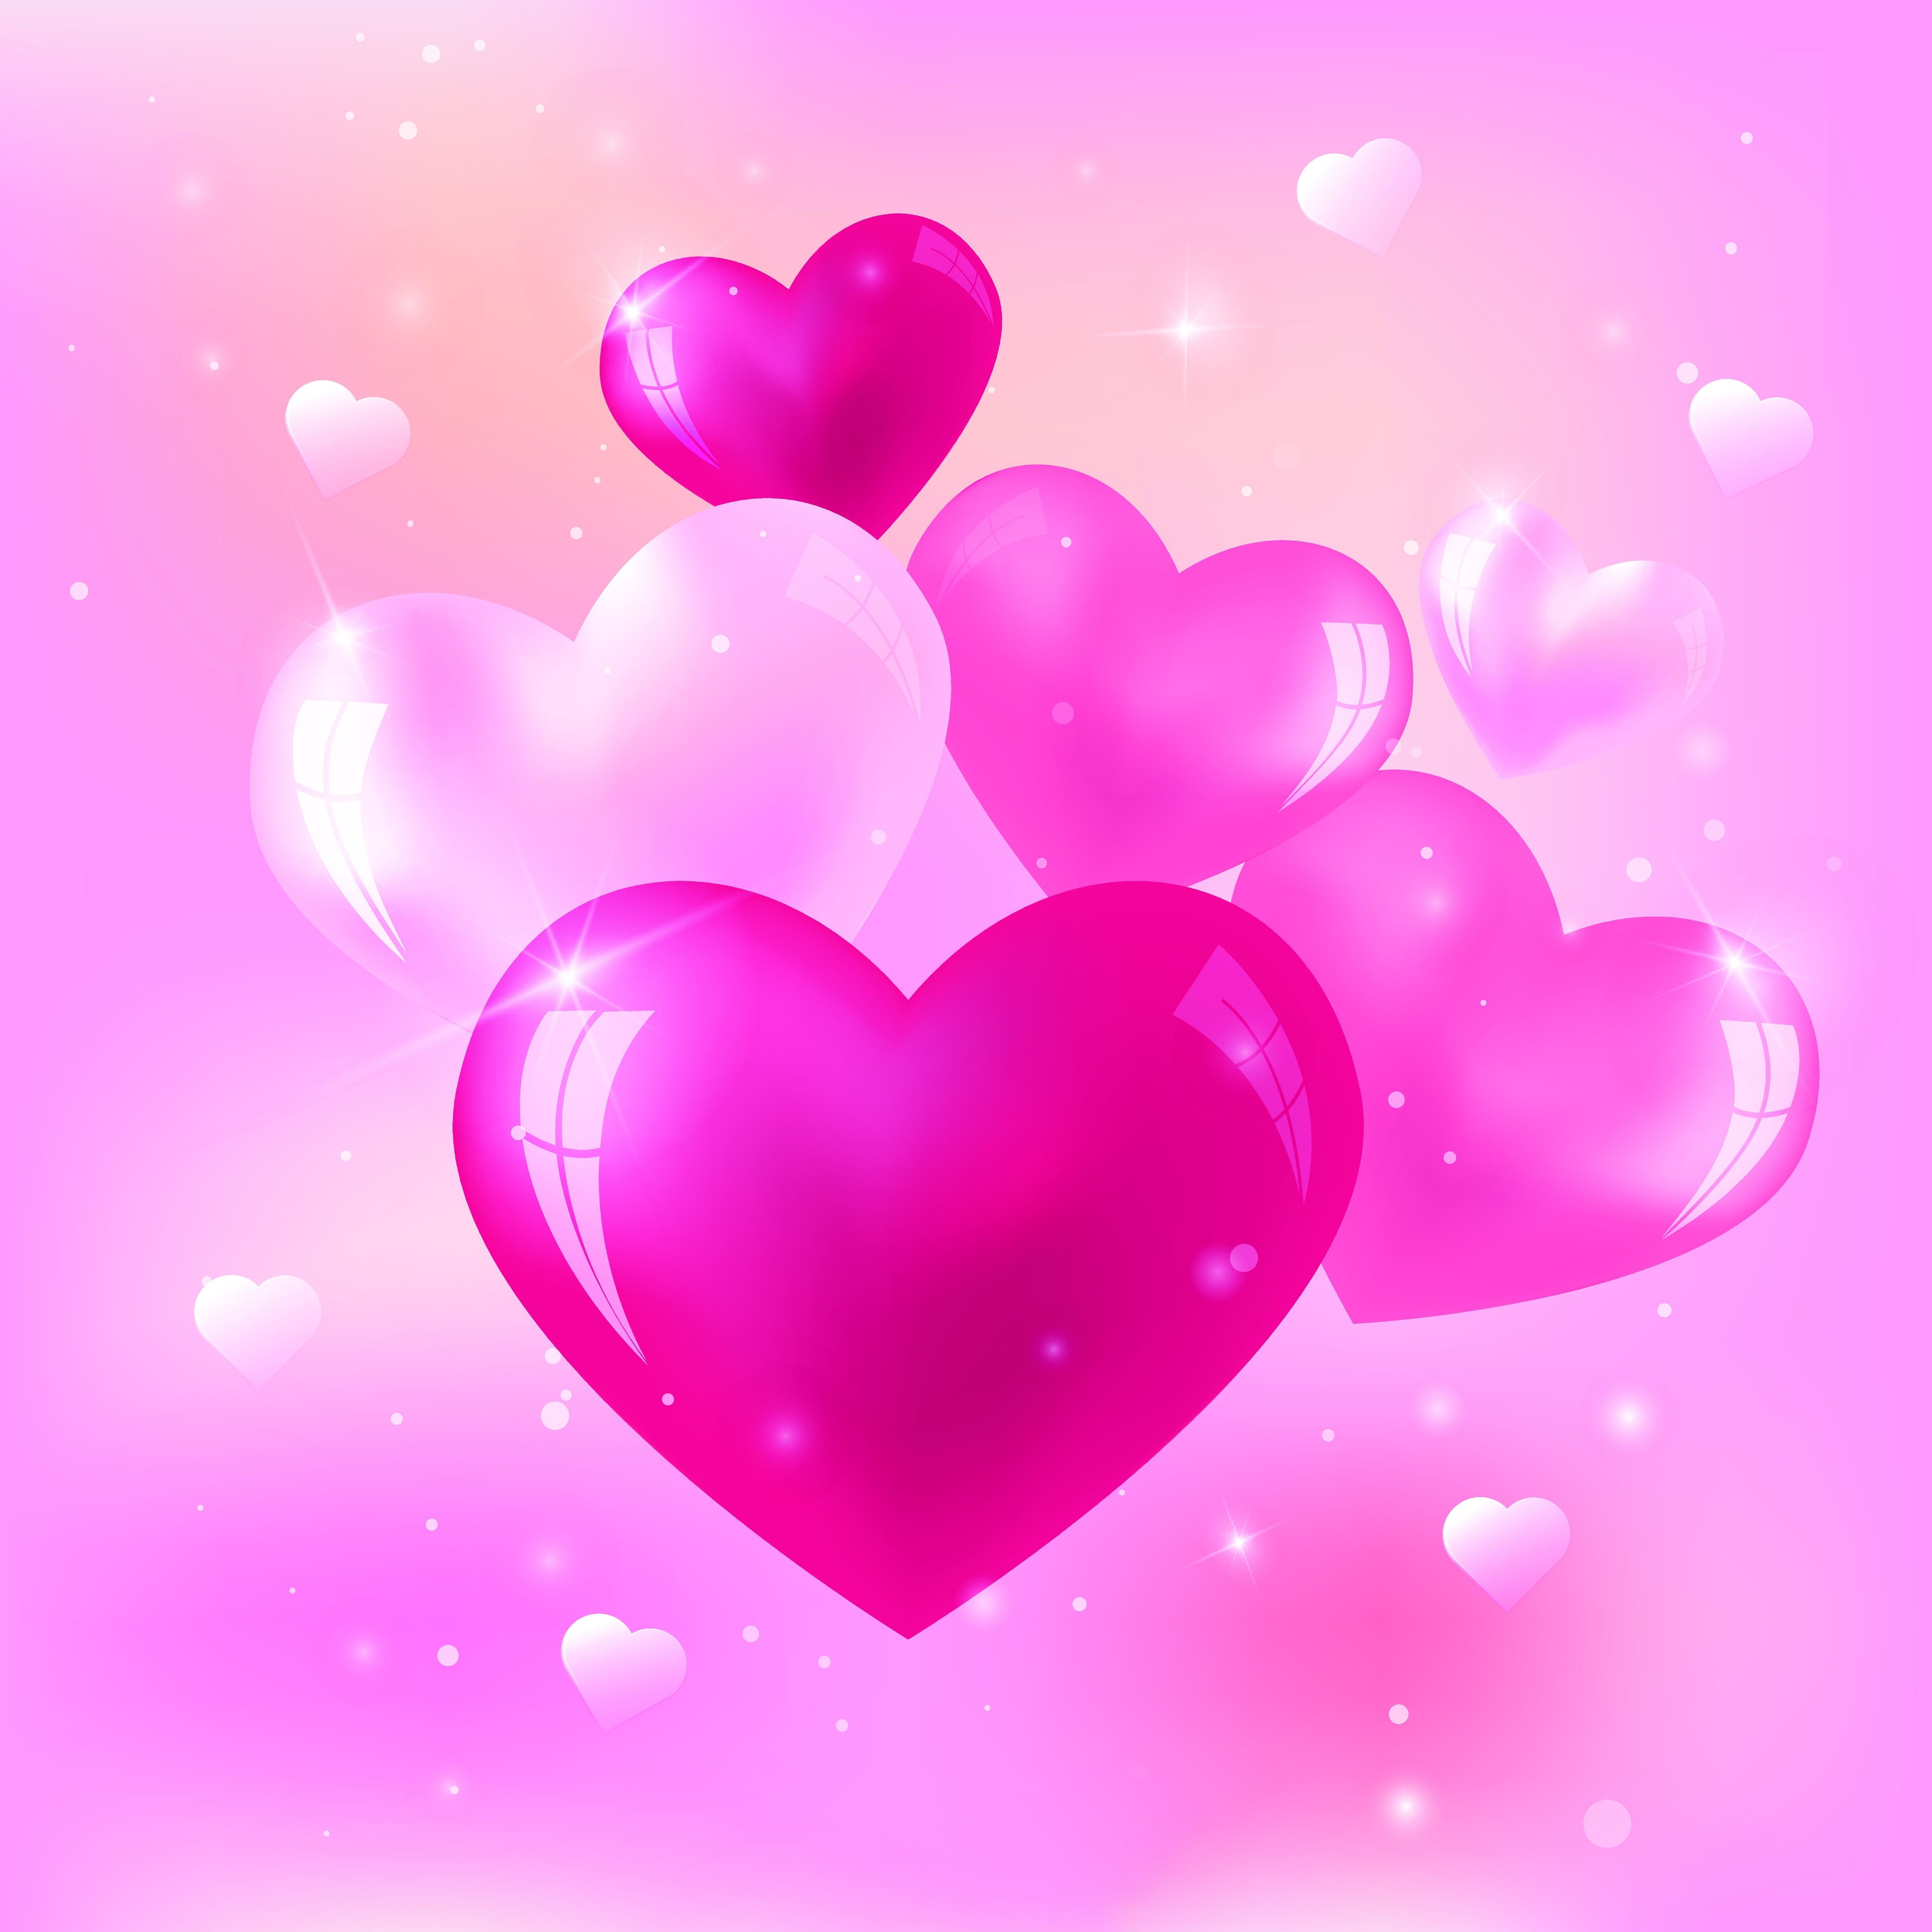 love #pink #heart #hearts #love #heart #background K #wallpaper #hdwallpaper #desktop. Heart wallpaper, Cute love wallpaper, Love wallpaper